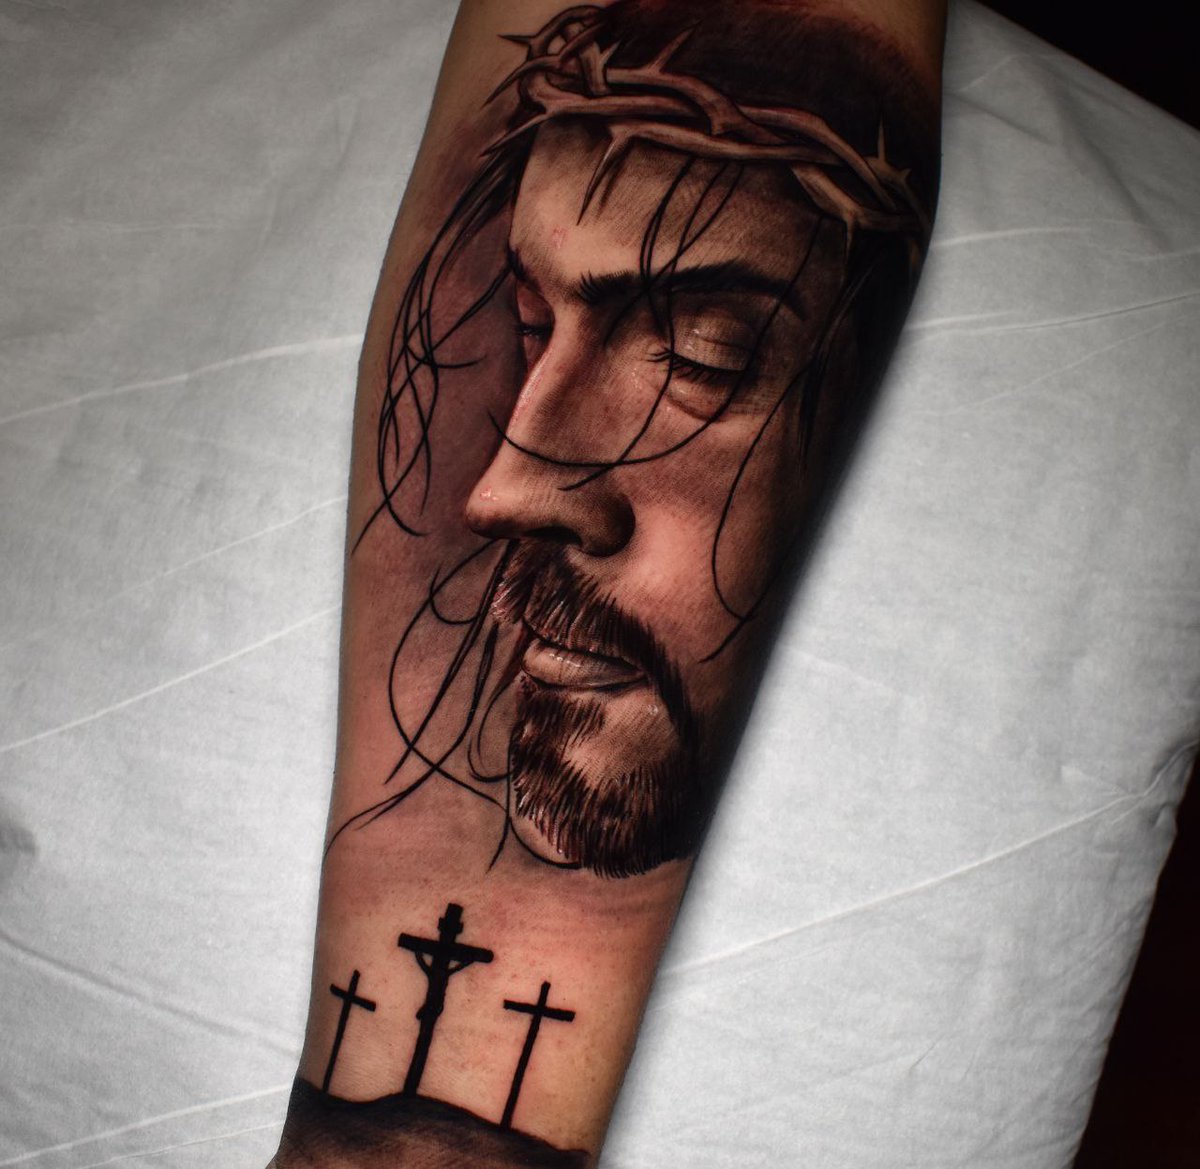 Tatuajes de @__ismaeljimenez__ 
Cáceres
#tattoo #tatuaje #tatto #tatoo #tatu #tattoos #tatuajes #tatuajerealistas #realismotattoo  #tatuajesenfotos  #artistasdeltatuaje  #tatuajesnegros  #tatuajerealista  #tatuajesenfotos_ink  #tatuajedeldia  #tatuajeespaña  #tatuajesytatuadores